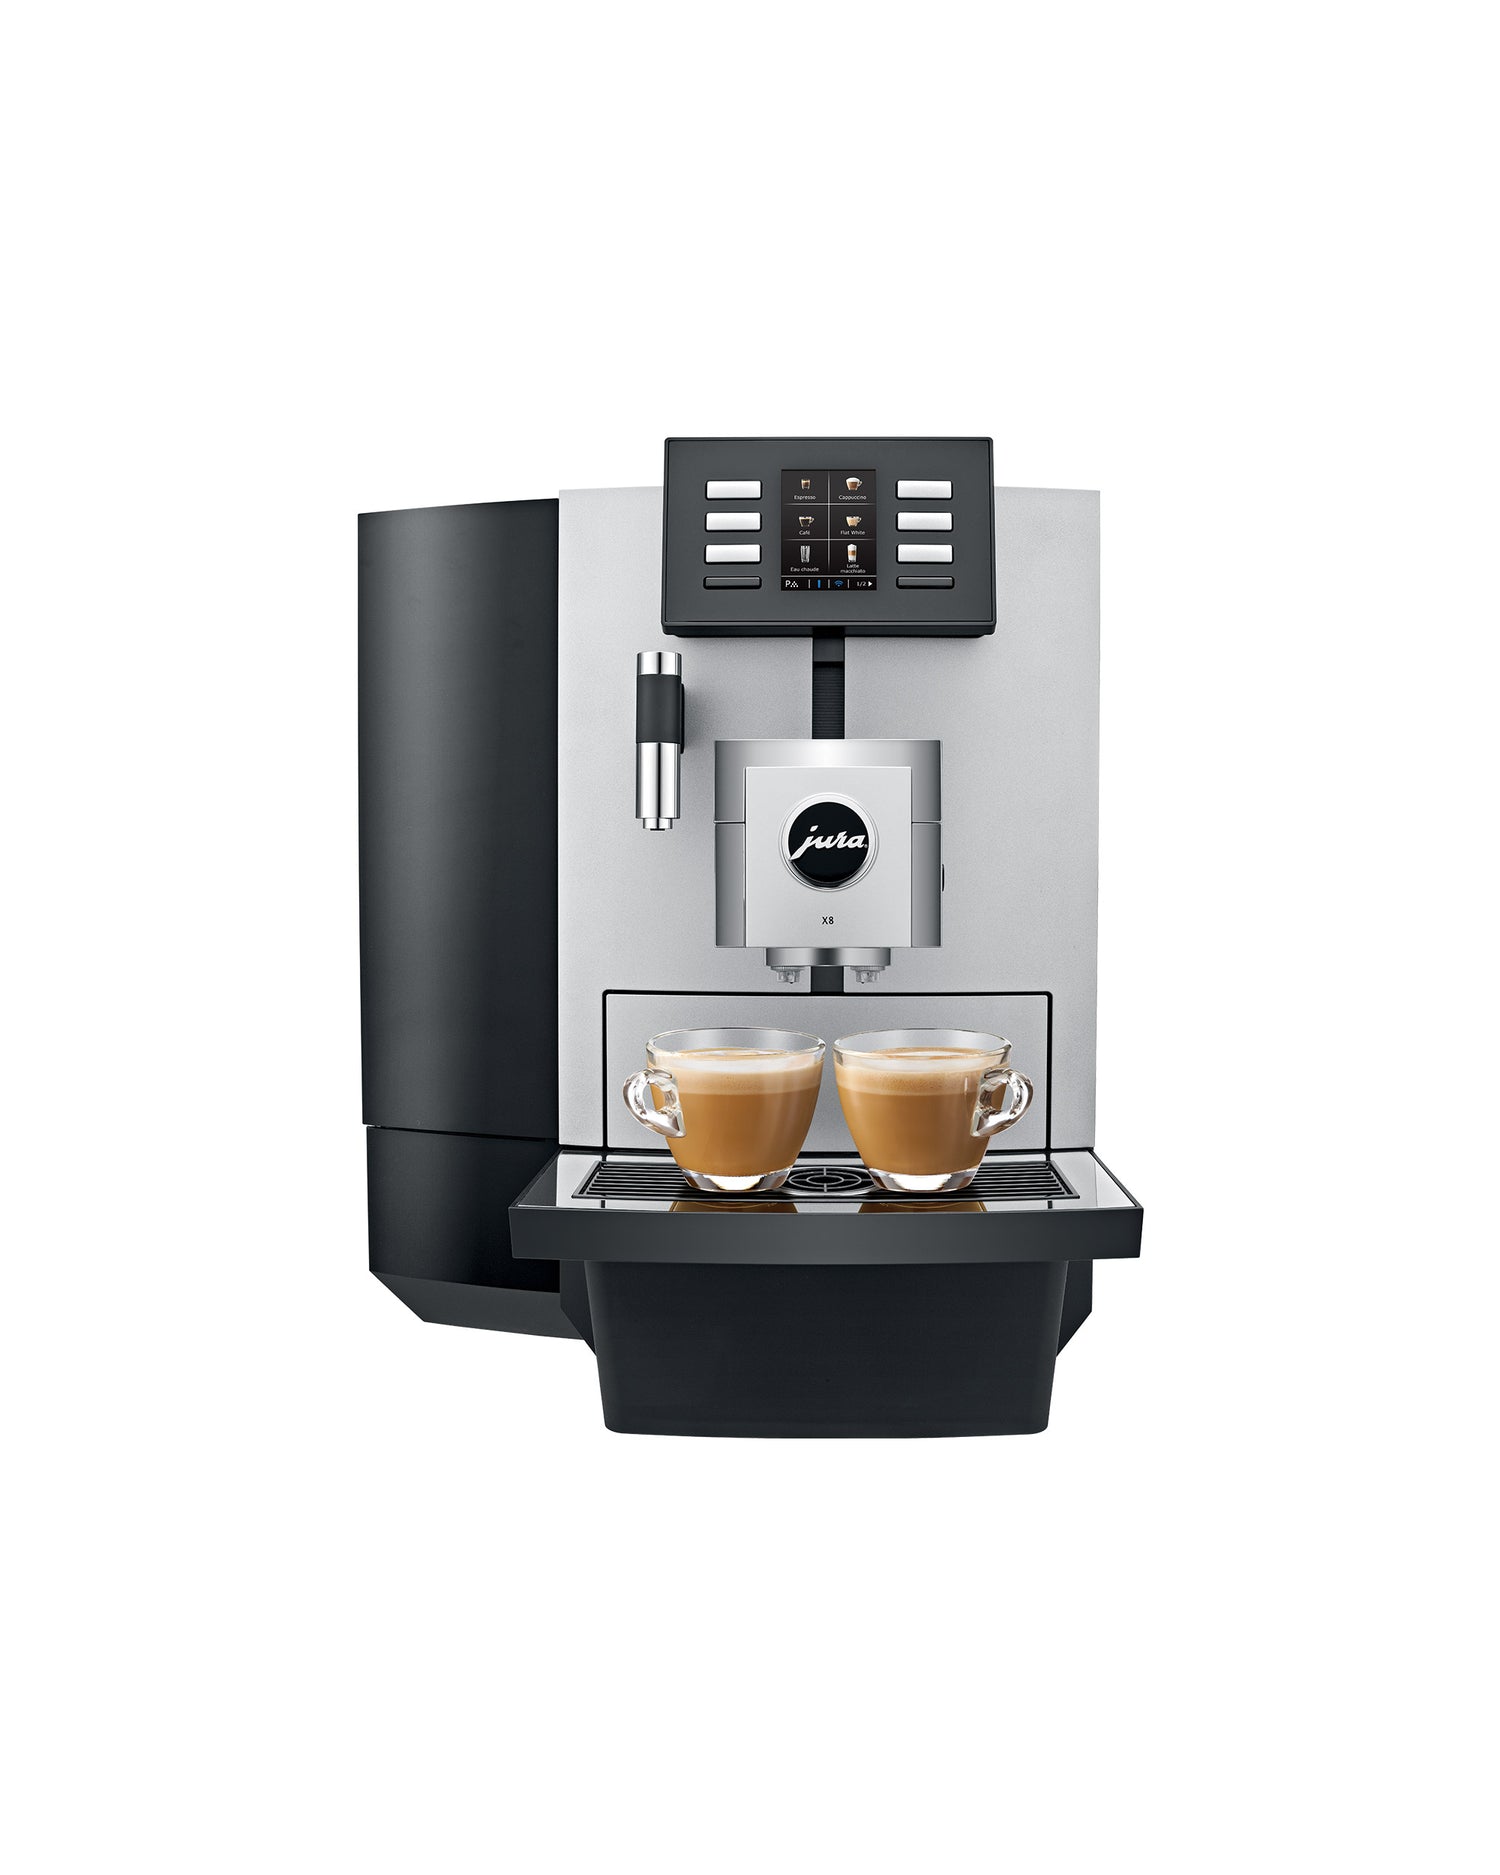 Commercial espresso machines